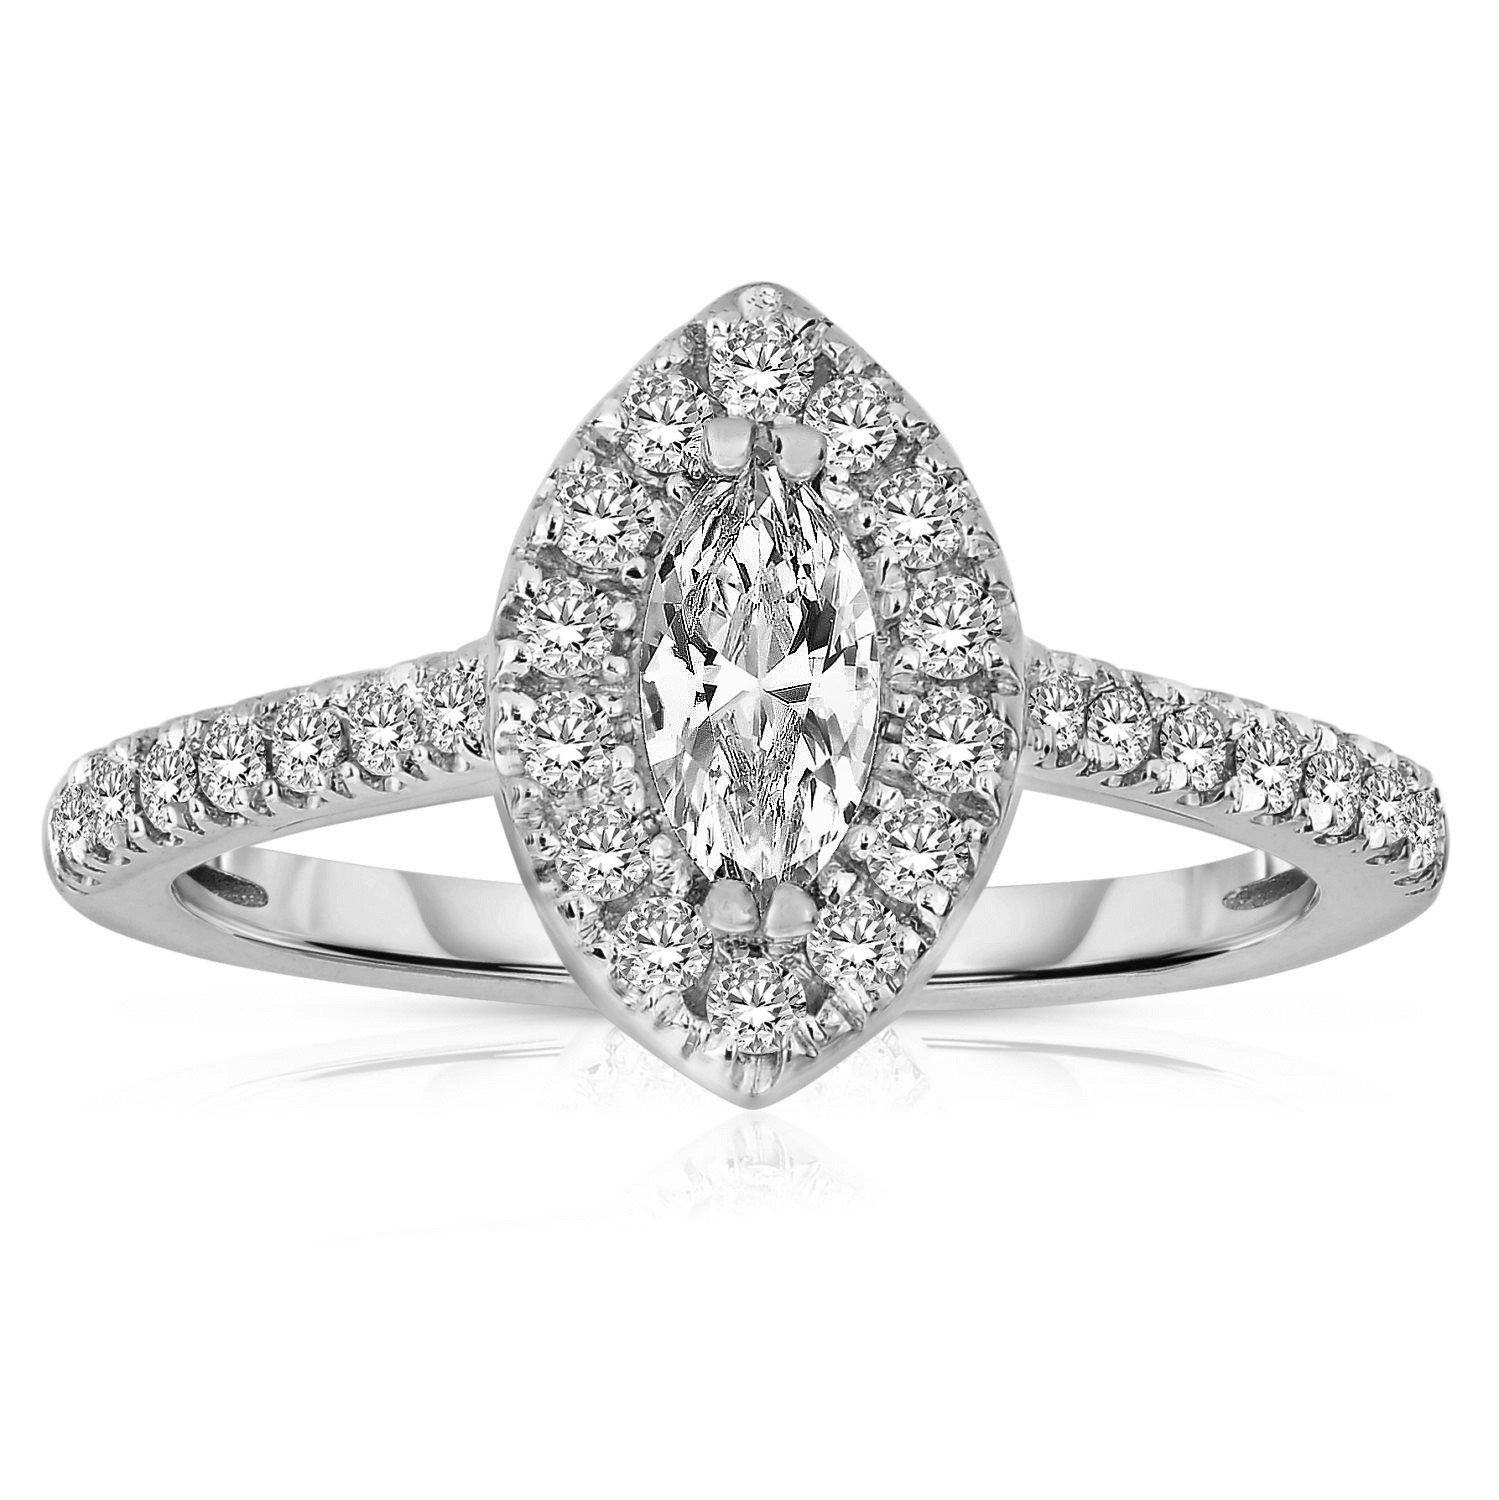 Gold Diamond Engagement Ring
 Half Carat Marquise cut Halo Diamond Engagement Ring in